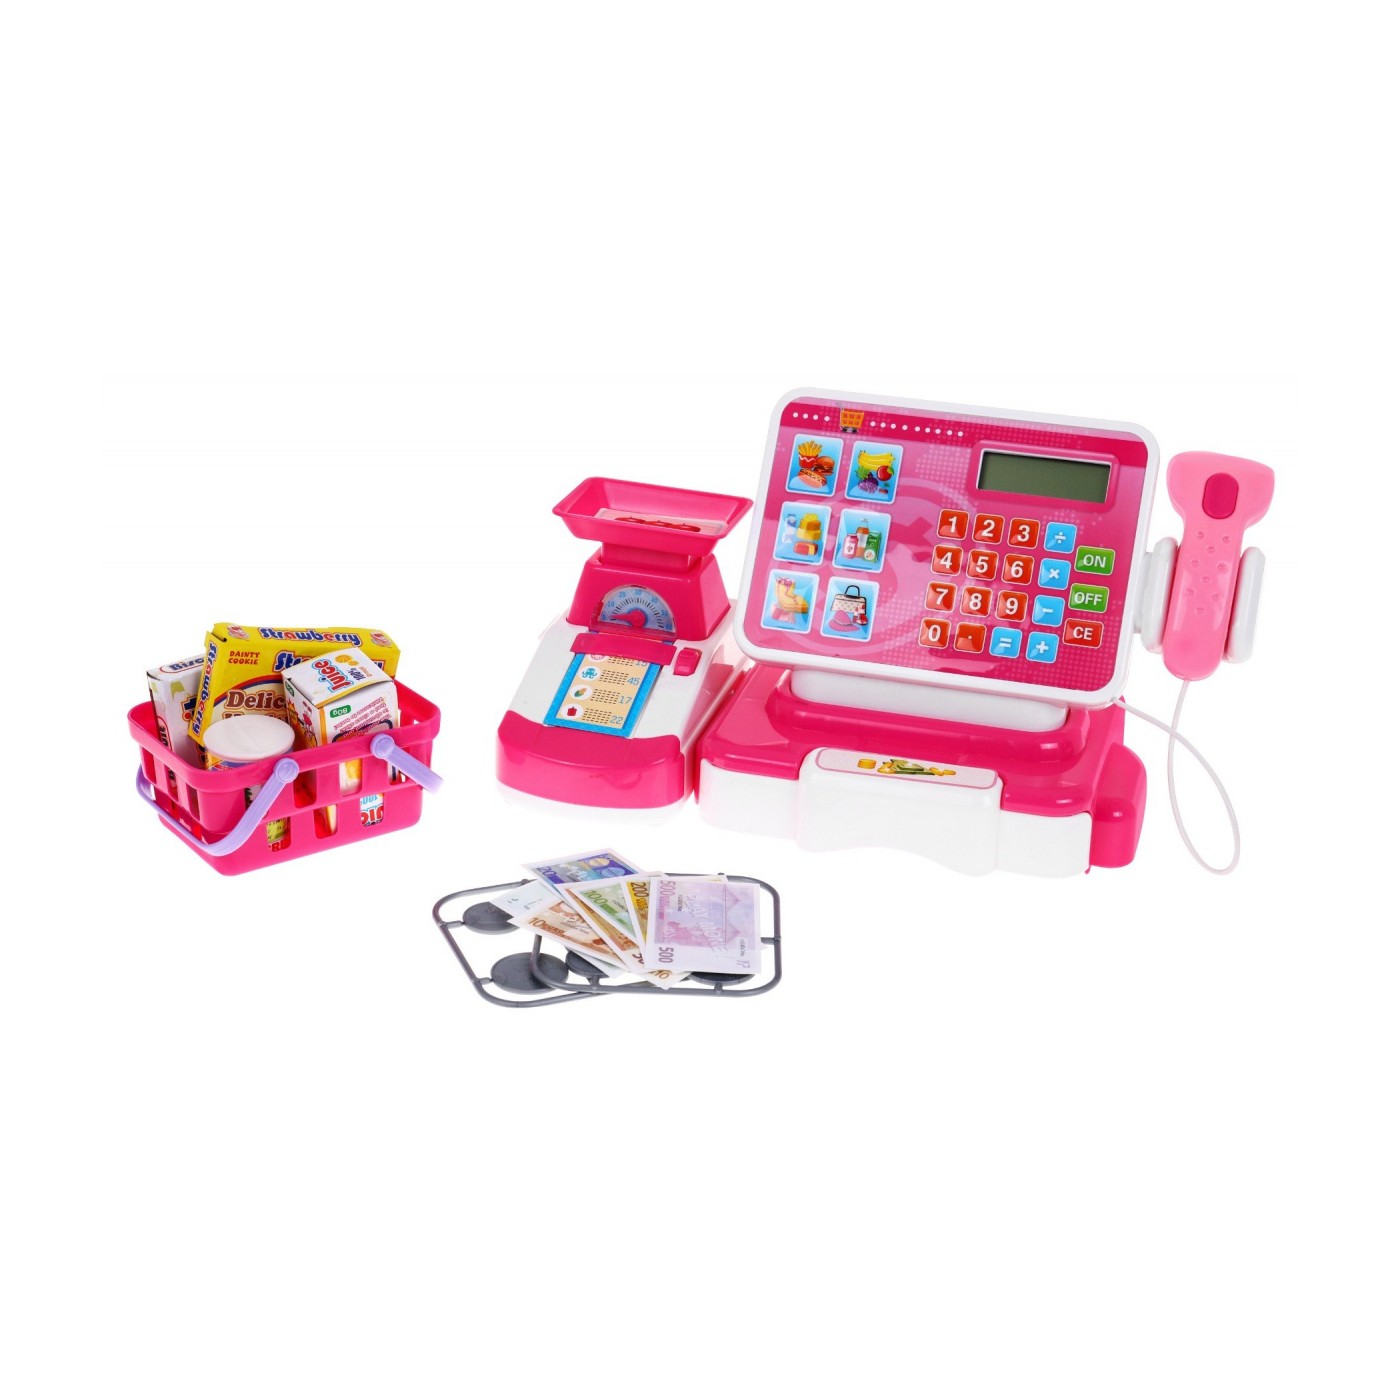 Store cash register + shopping basket, pink accessories